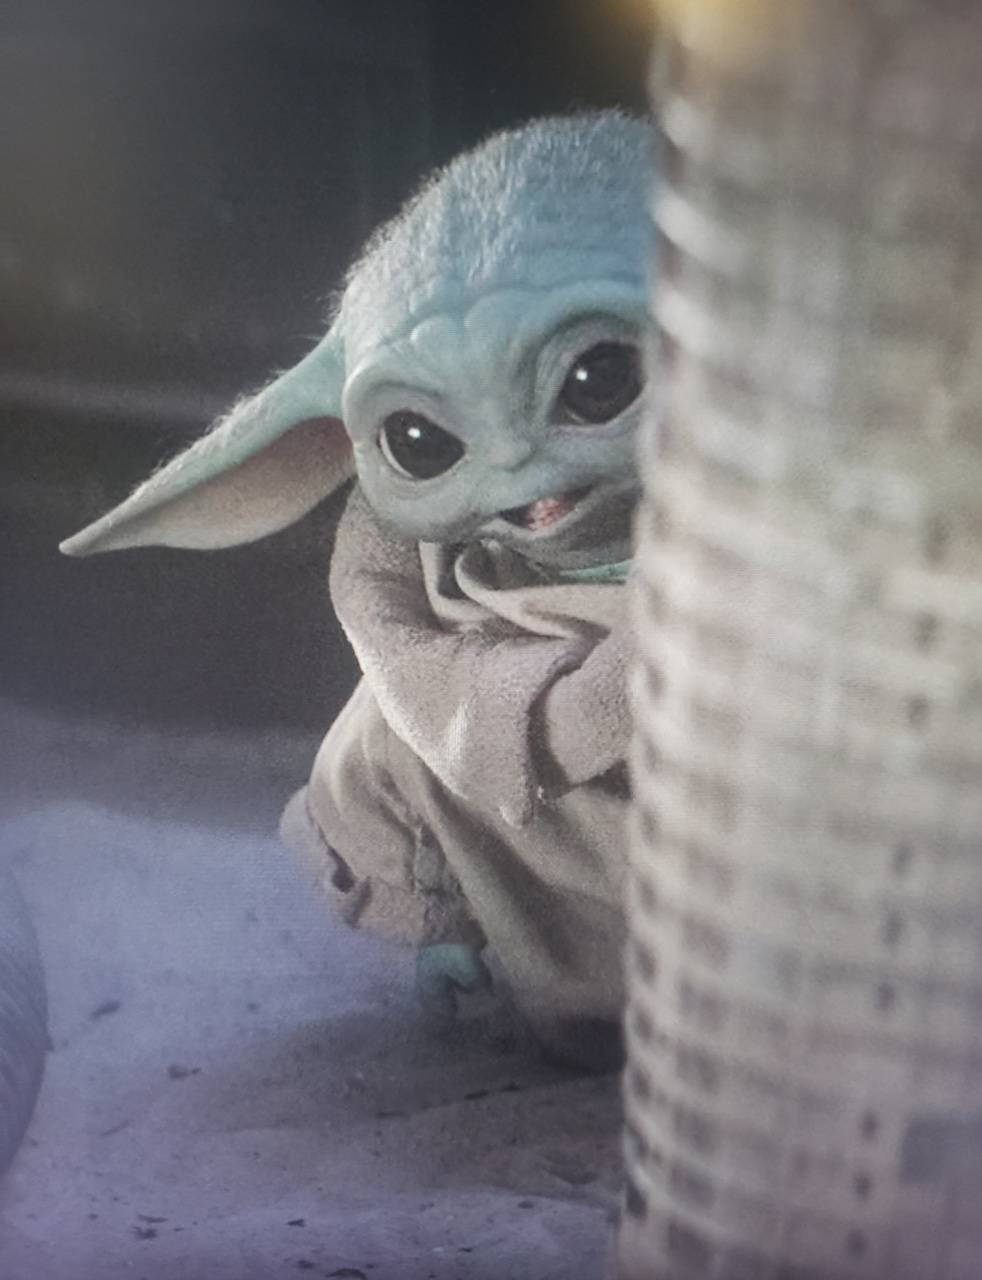 Little Baby Yoda Background